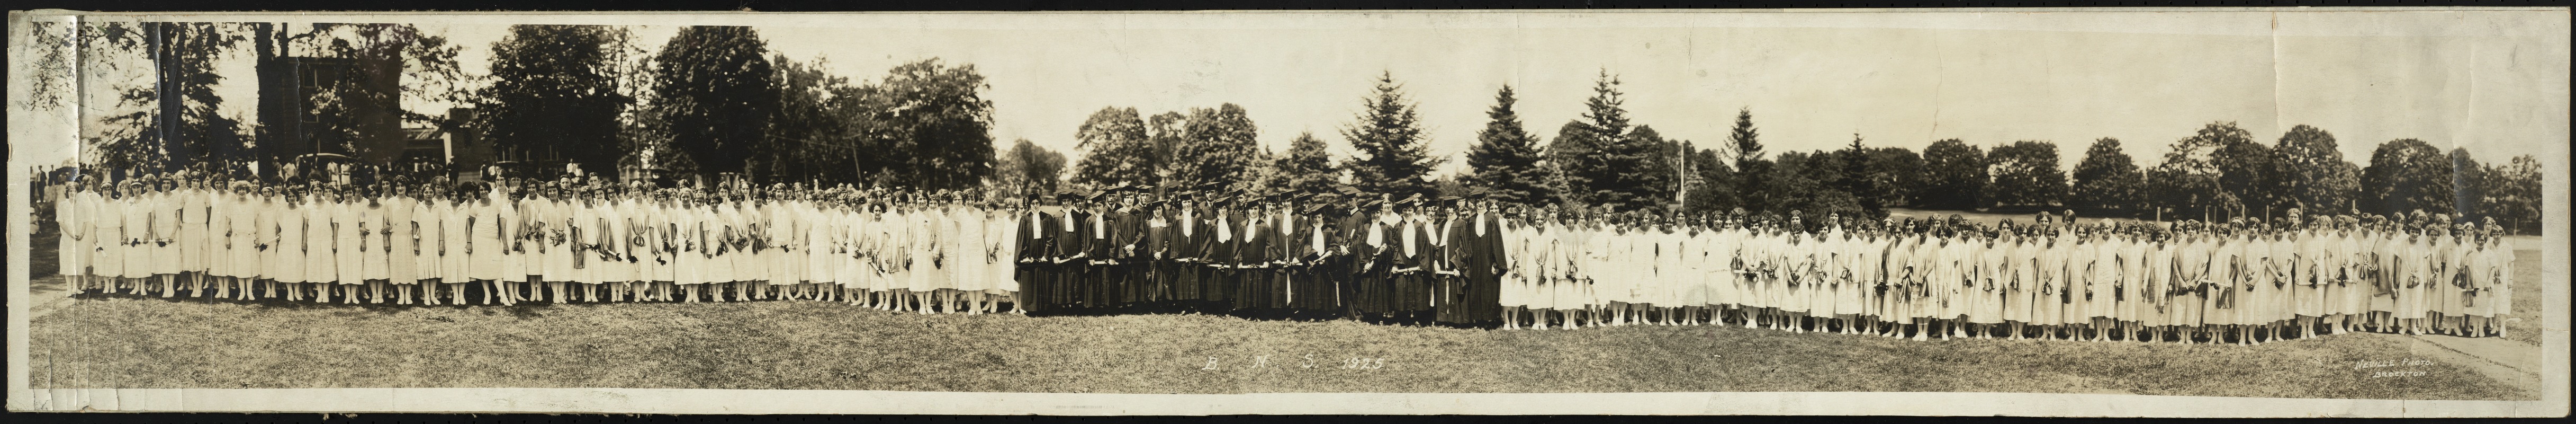 Bridgewater State Normal School Class of 1925